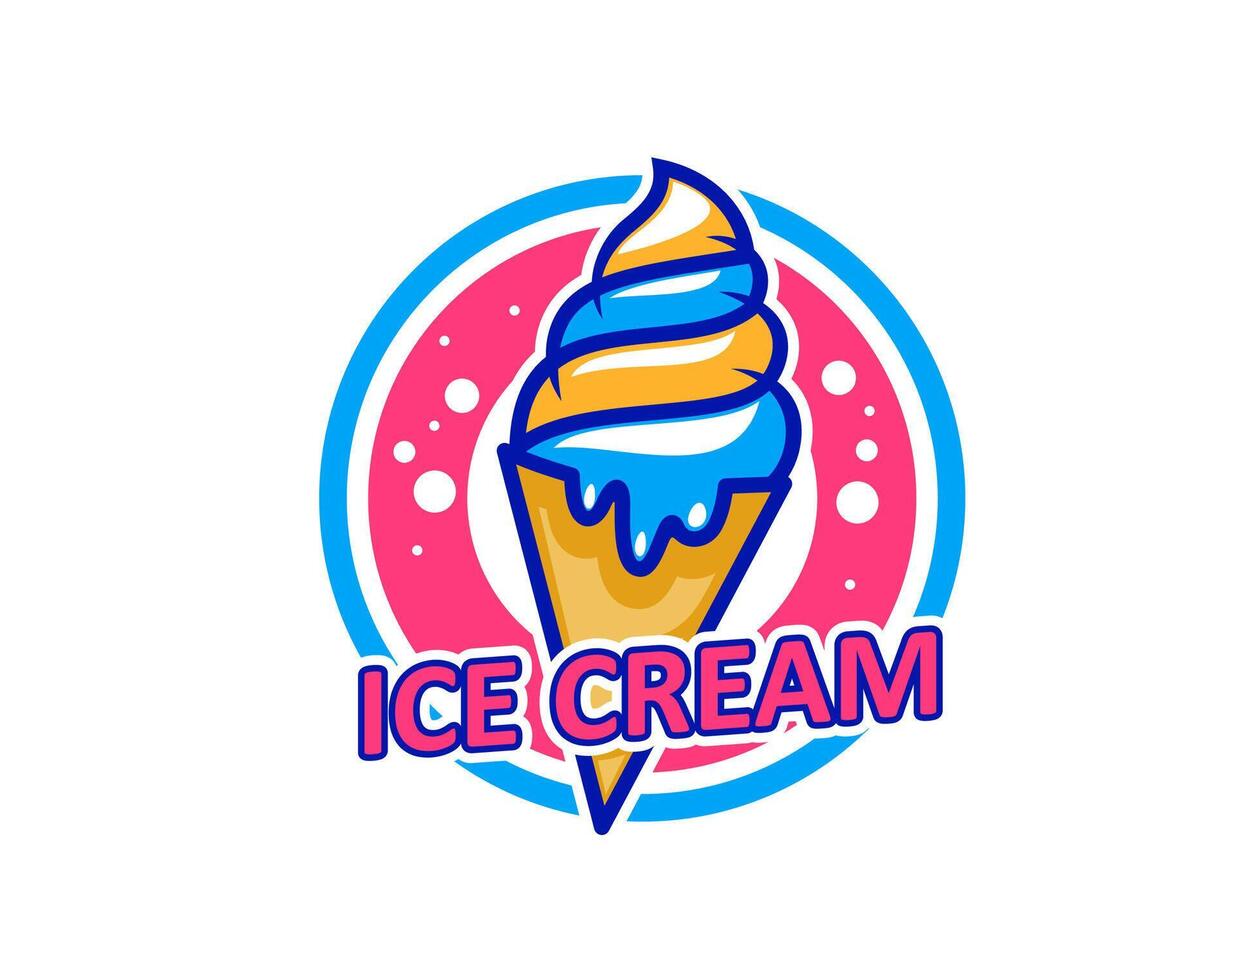 Ice cream waffle cone icon, gelato dessert emblem vector